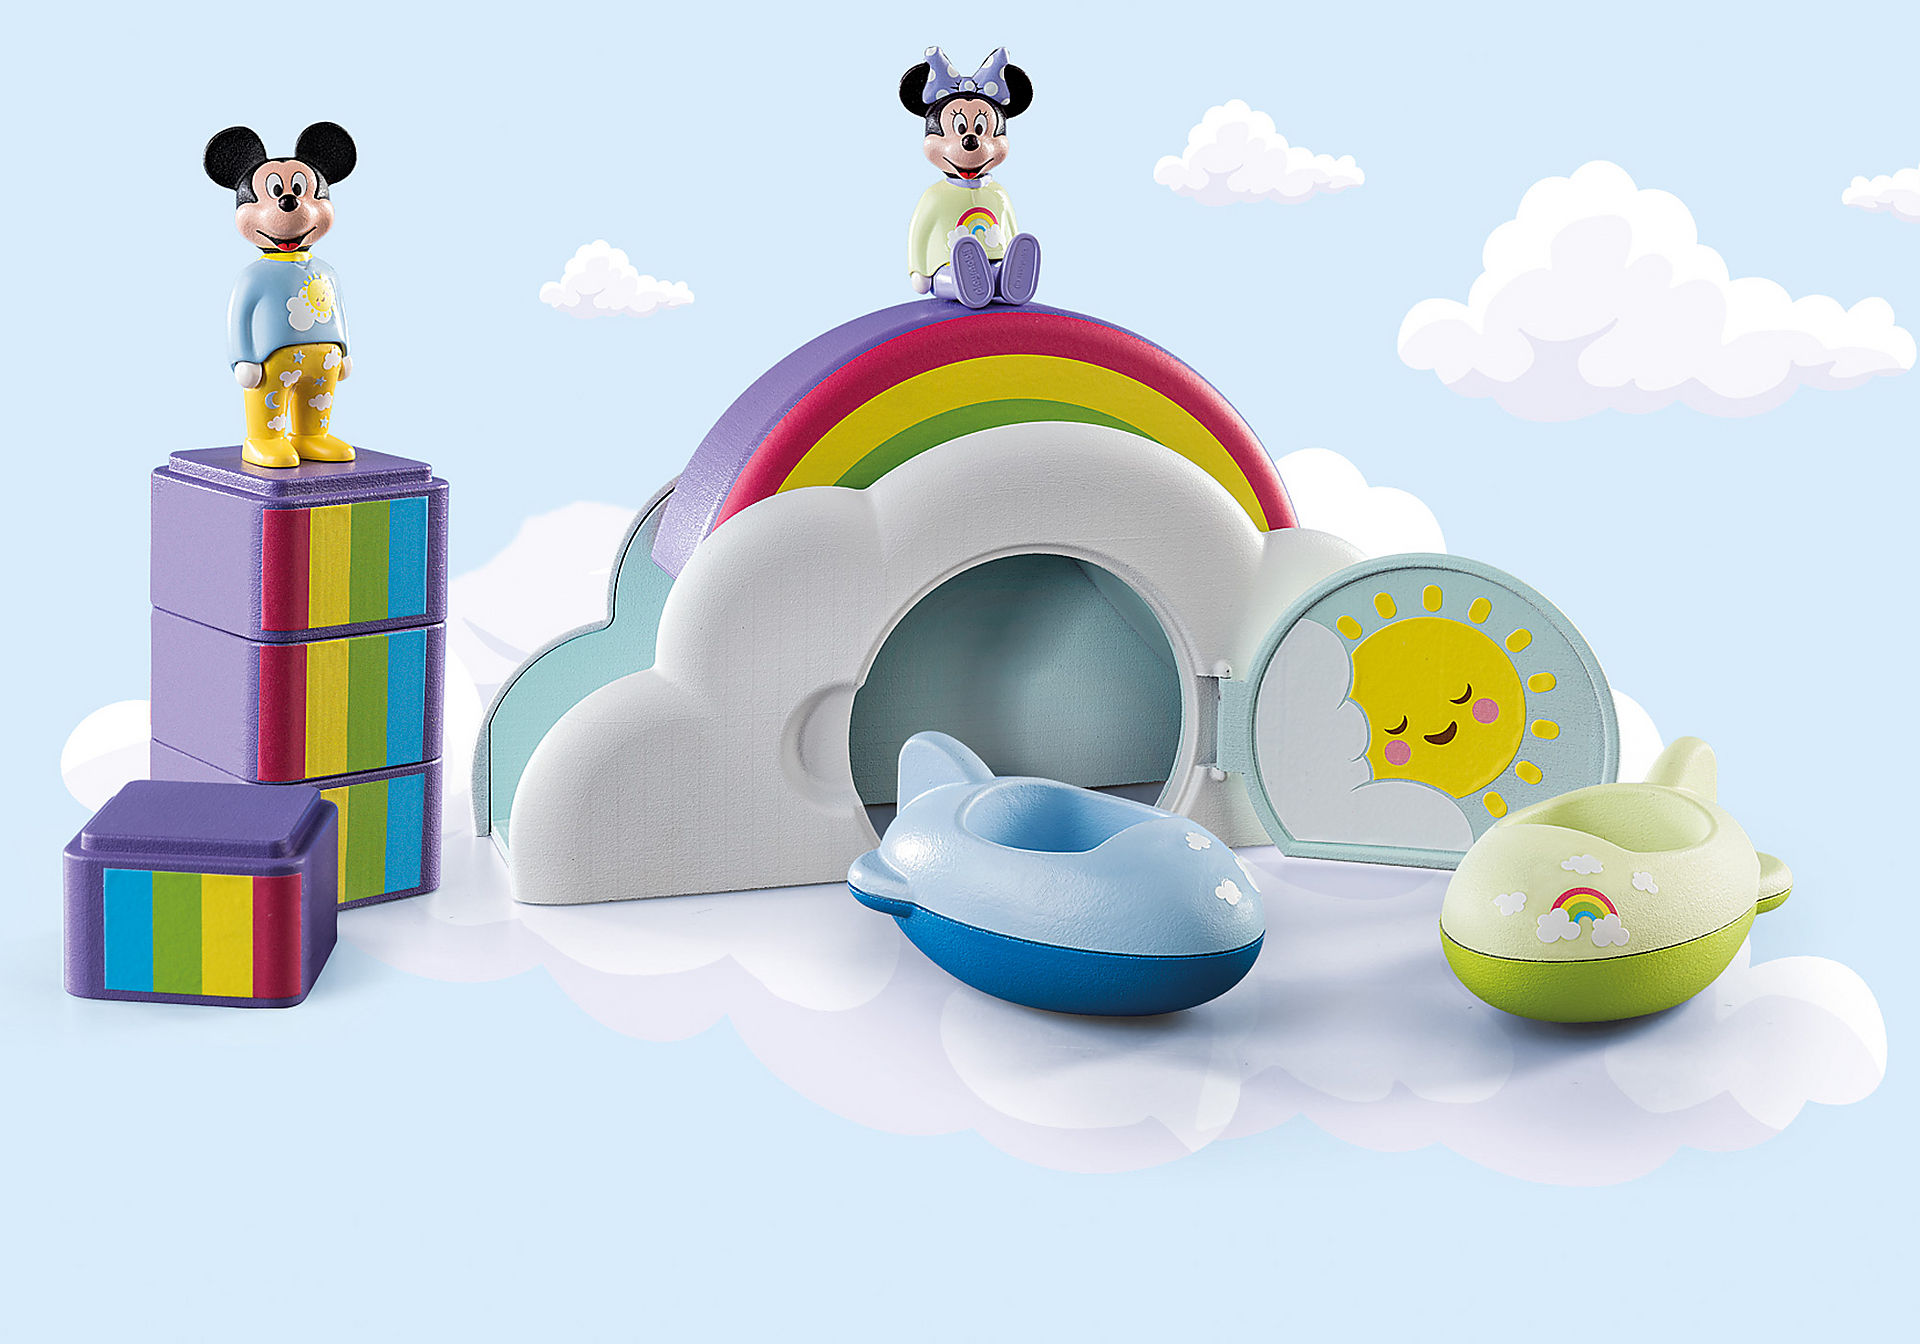 71319 1.2.3 & Disney: Mickey's & Minnie's Cloud Home zoom image5